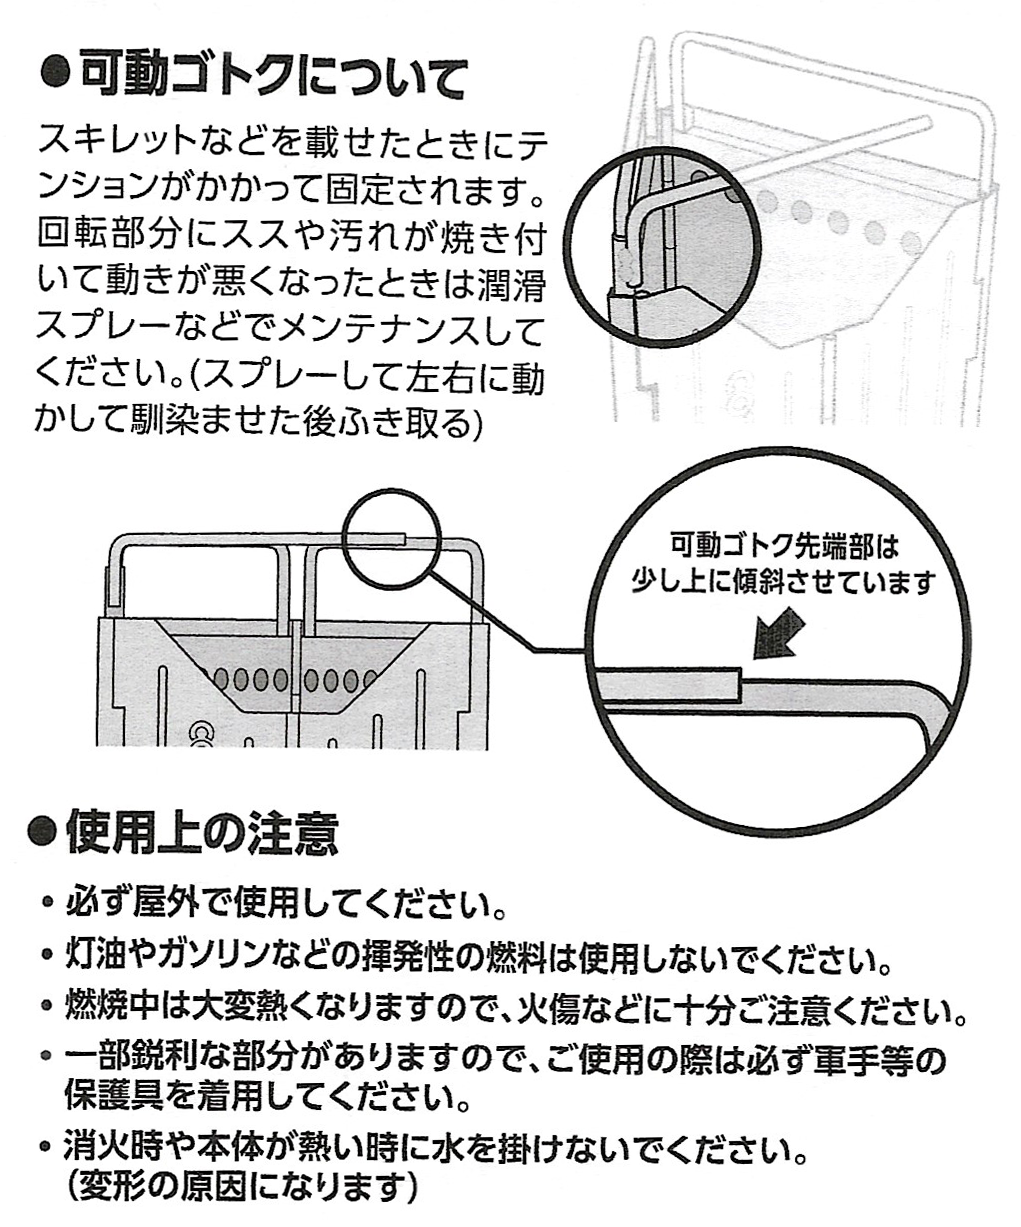 conifer-cone-pyromaster-2-folding-stove_jp_note_2